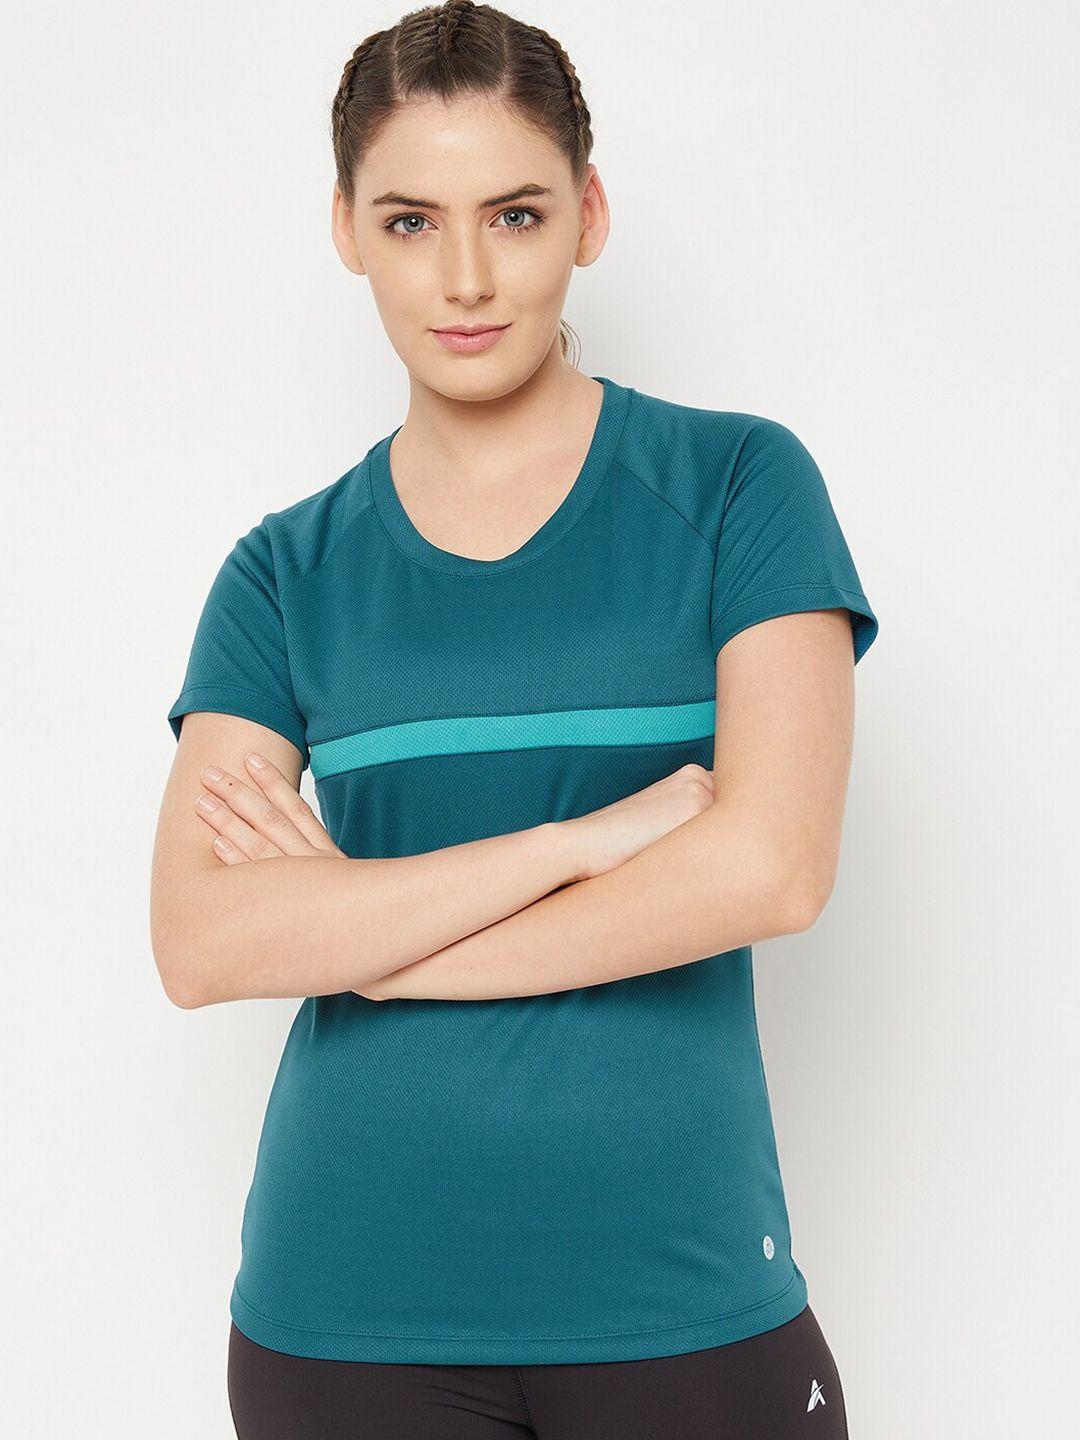 athlisis women teal v-neck slim fit t-shirt